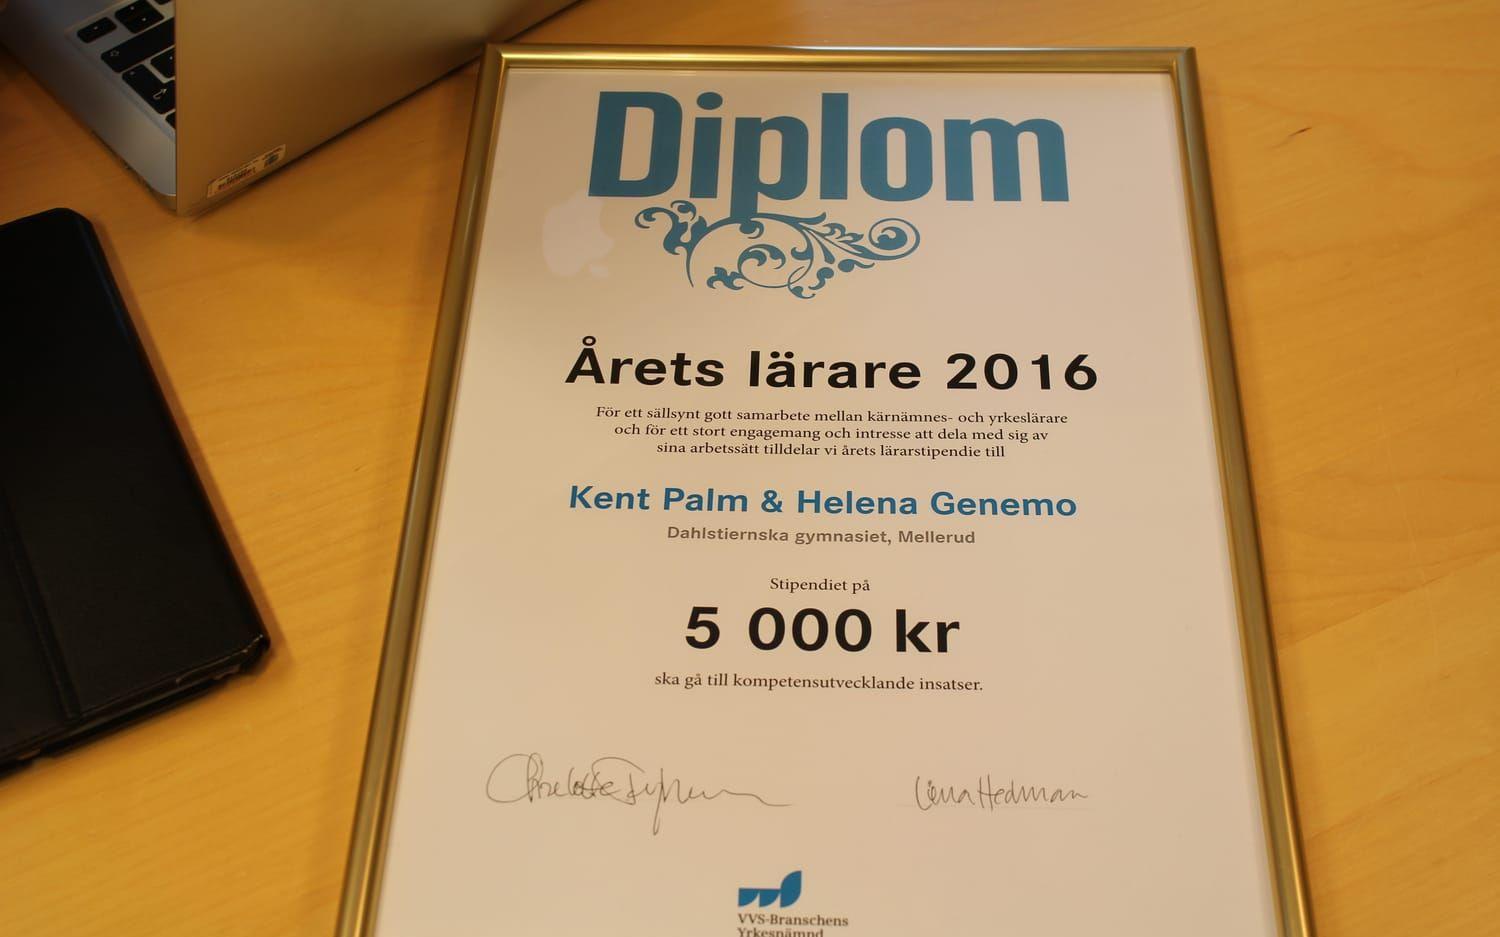 Diplomet som tilldelades med ett stipendium på 5 000 kronor. Bild: Johan Lindahl